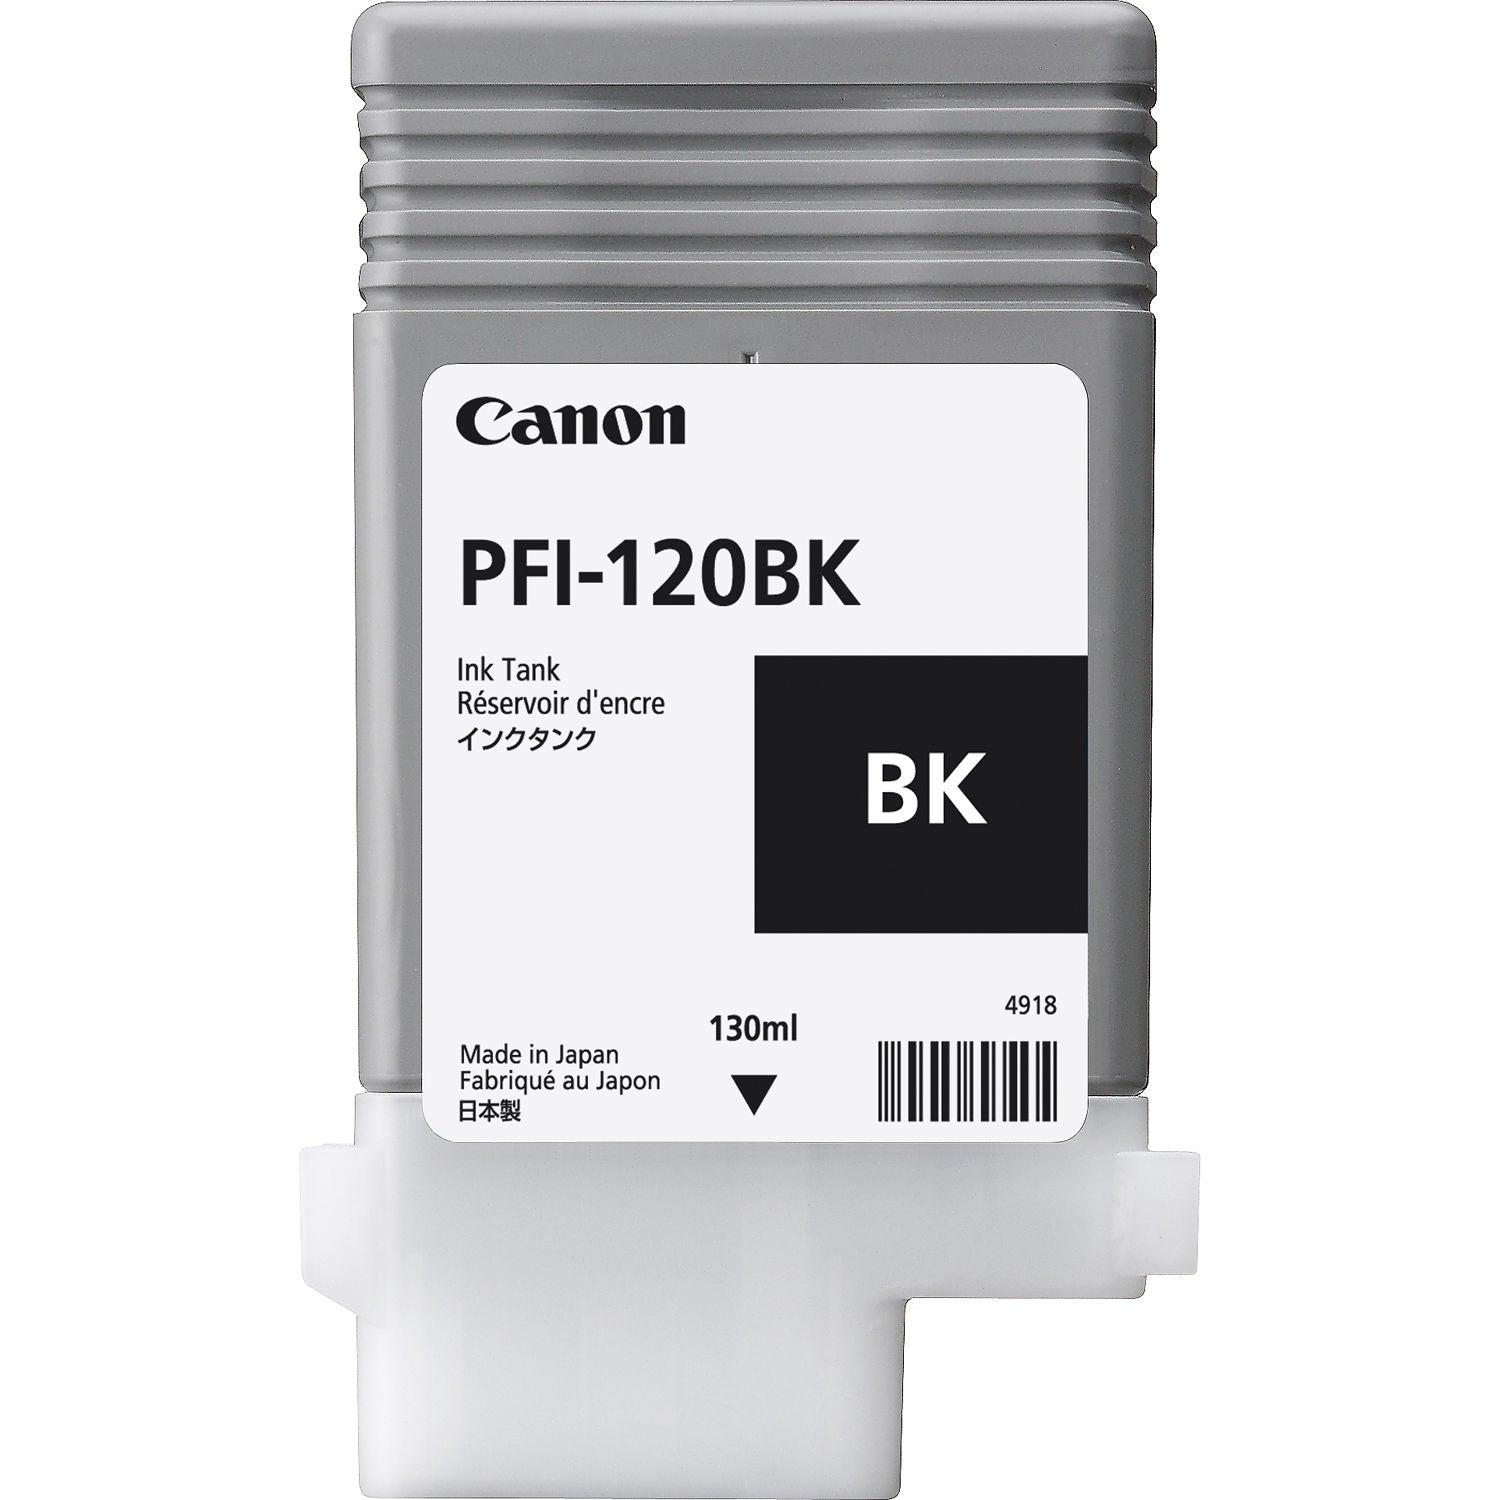 Canon PFI-120 Ink Cartridge for    ImagePrograf TM-200 TM-205 TM-300  & TM-305